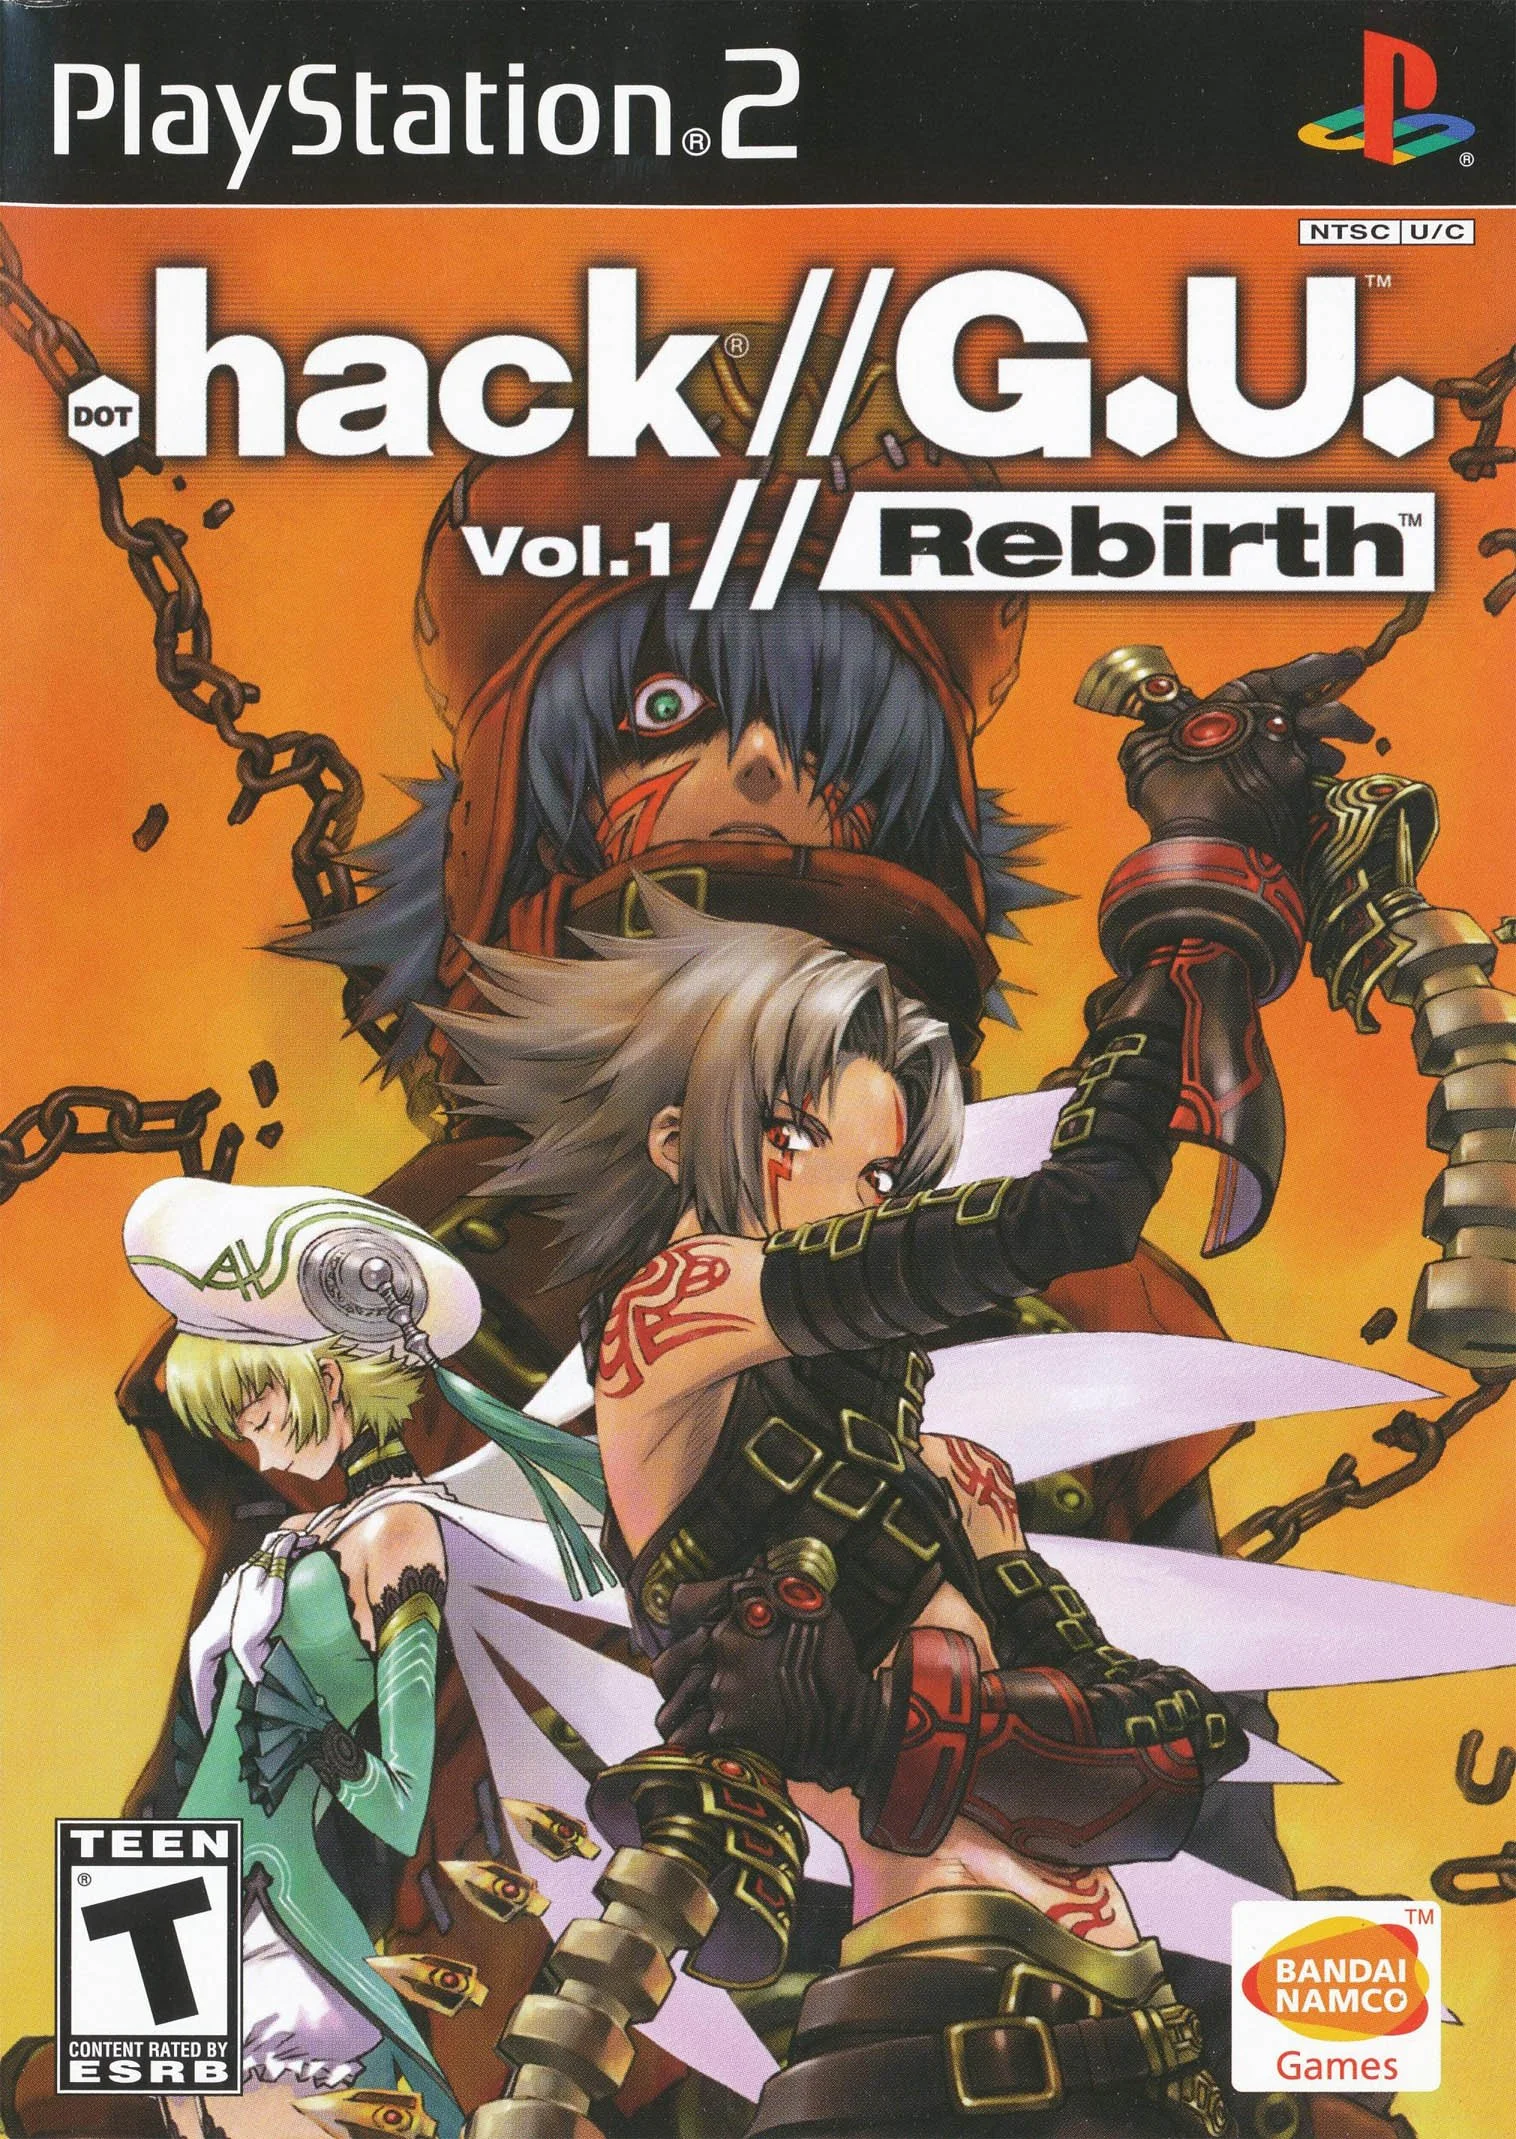 .hack//G.U.: Vol. 1 - Rebirth